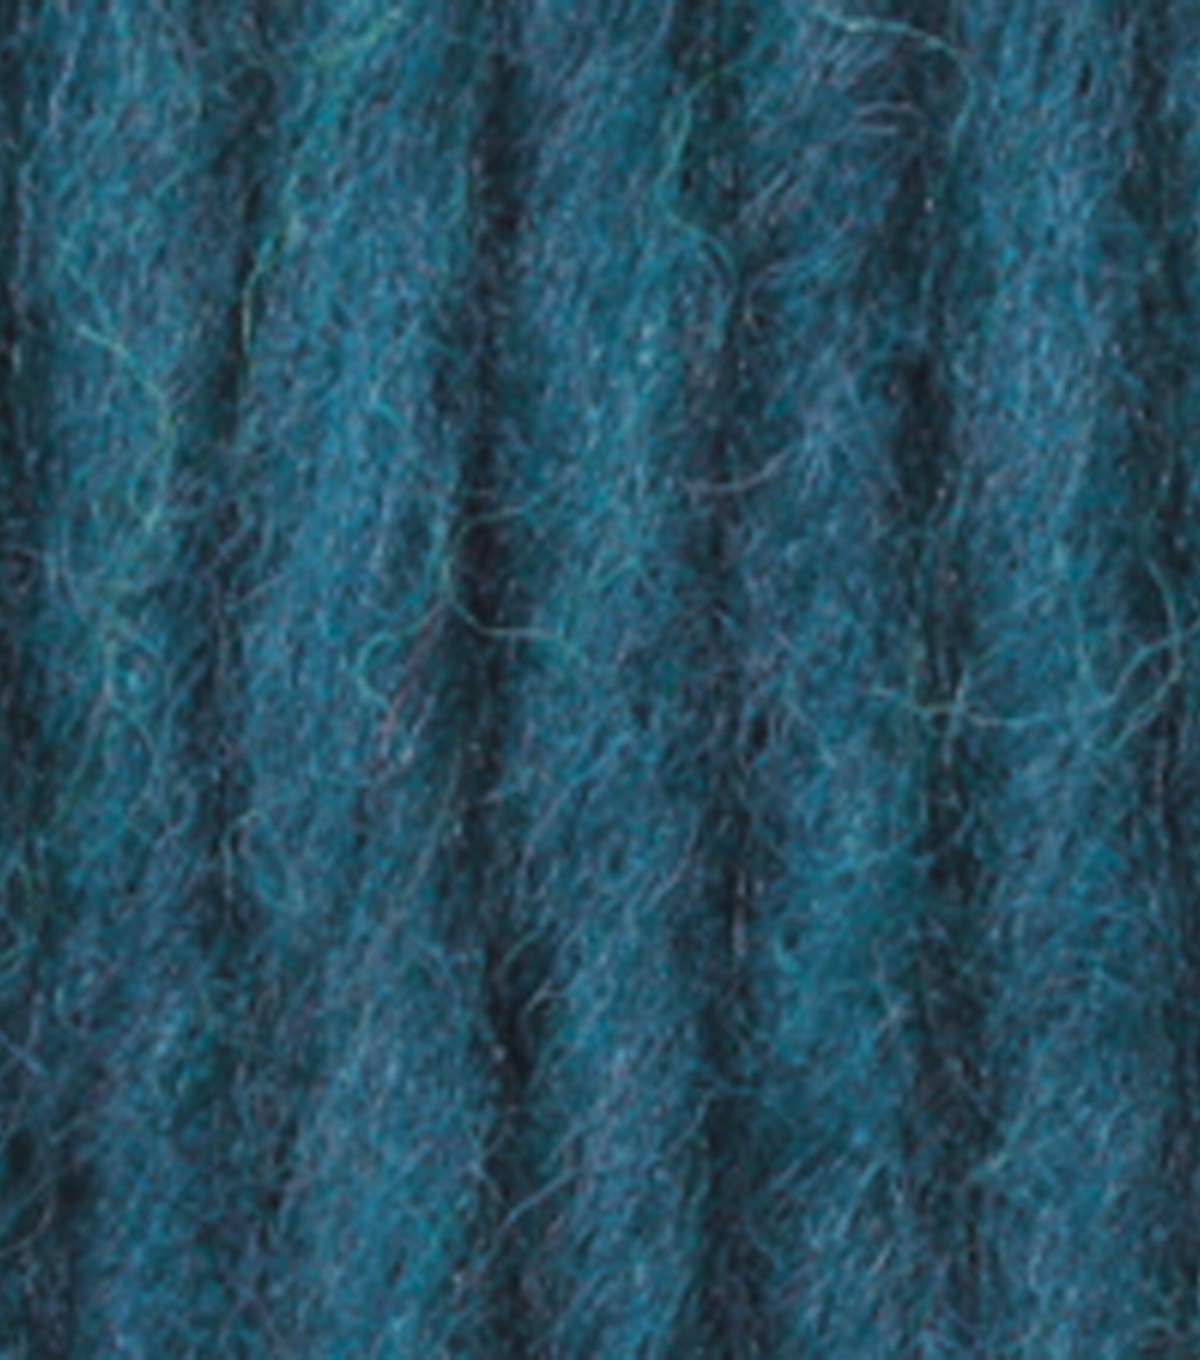 joanns wool yarn